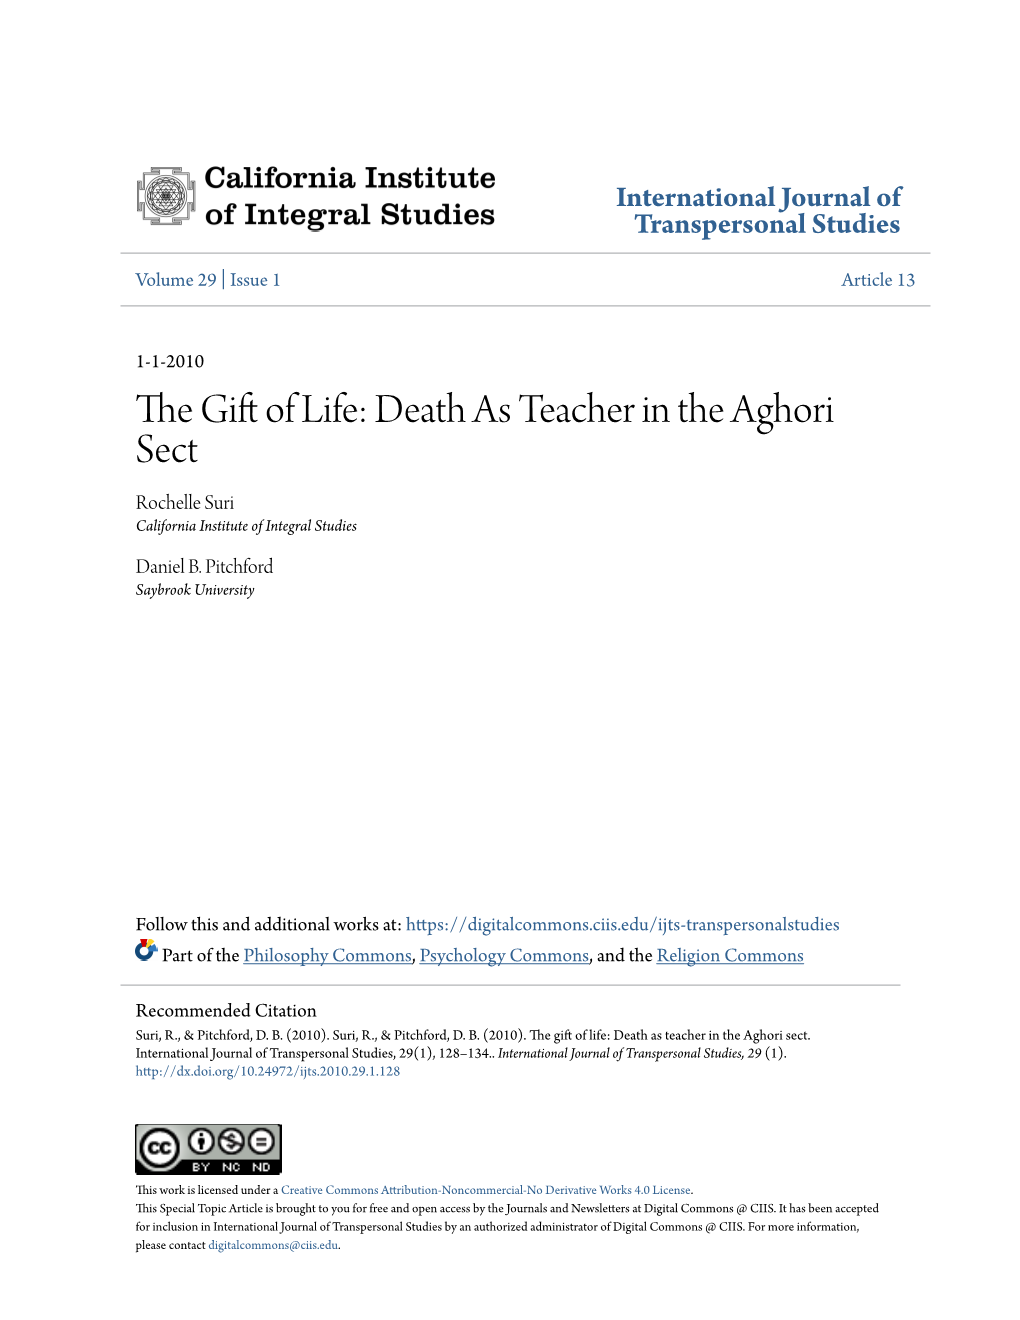 Death As Teacher in the Aghori Sect Rochelle Suri California Institute of Integral Studies